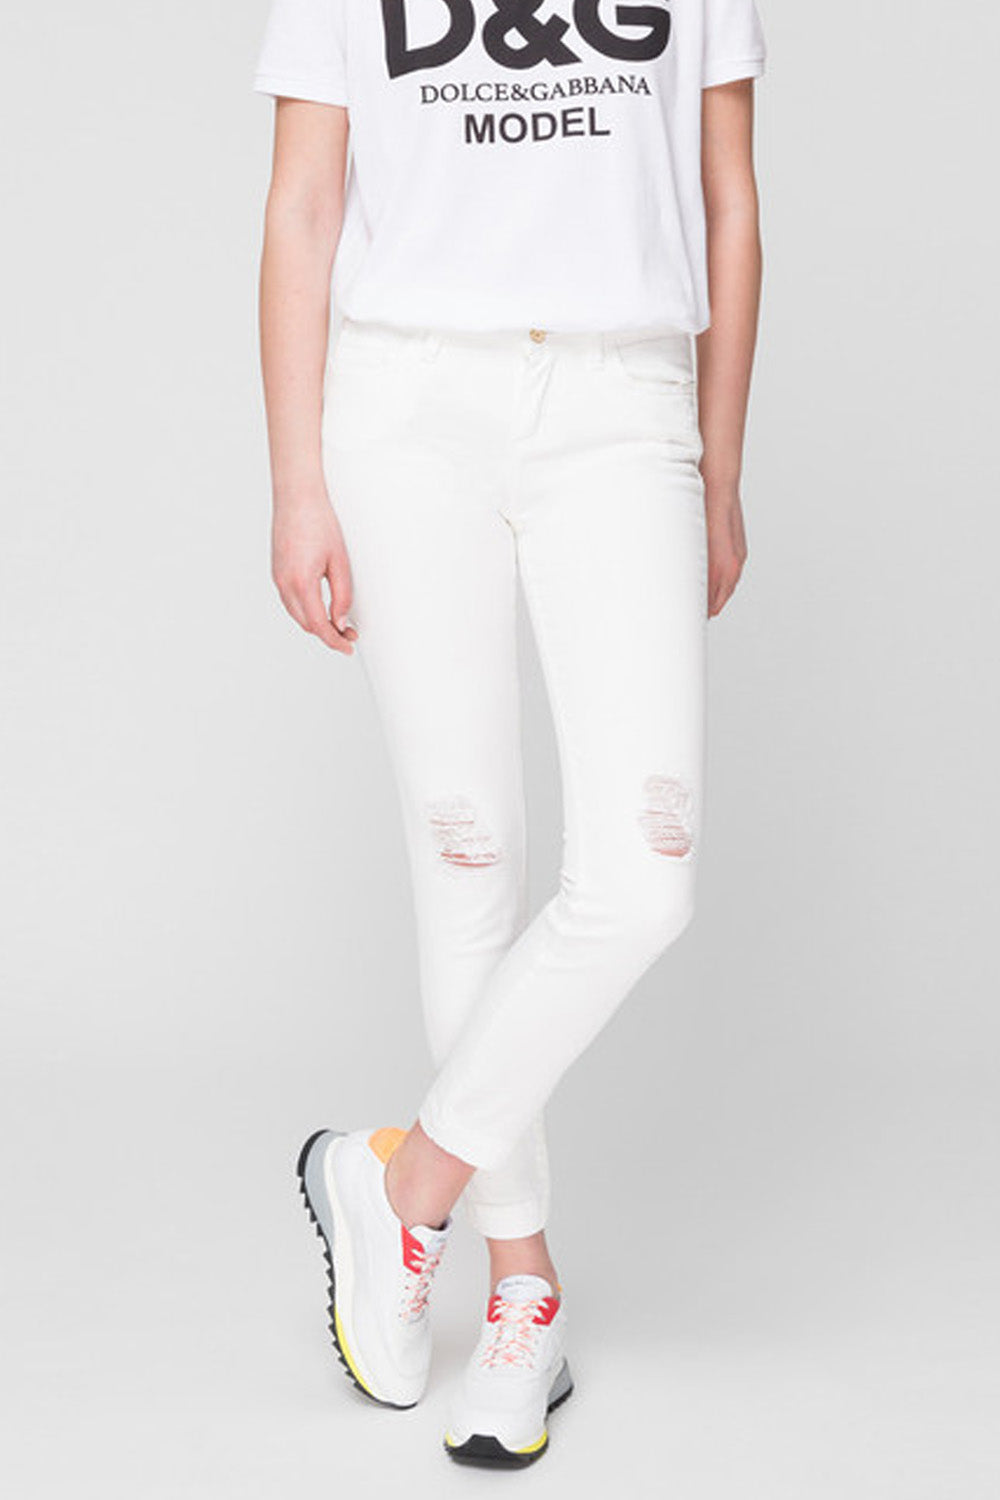 Dolce & Gabbana high-waist distressed white skinny jeans